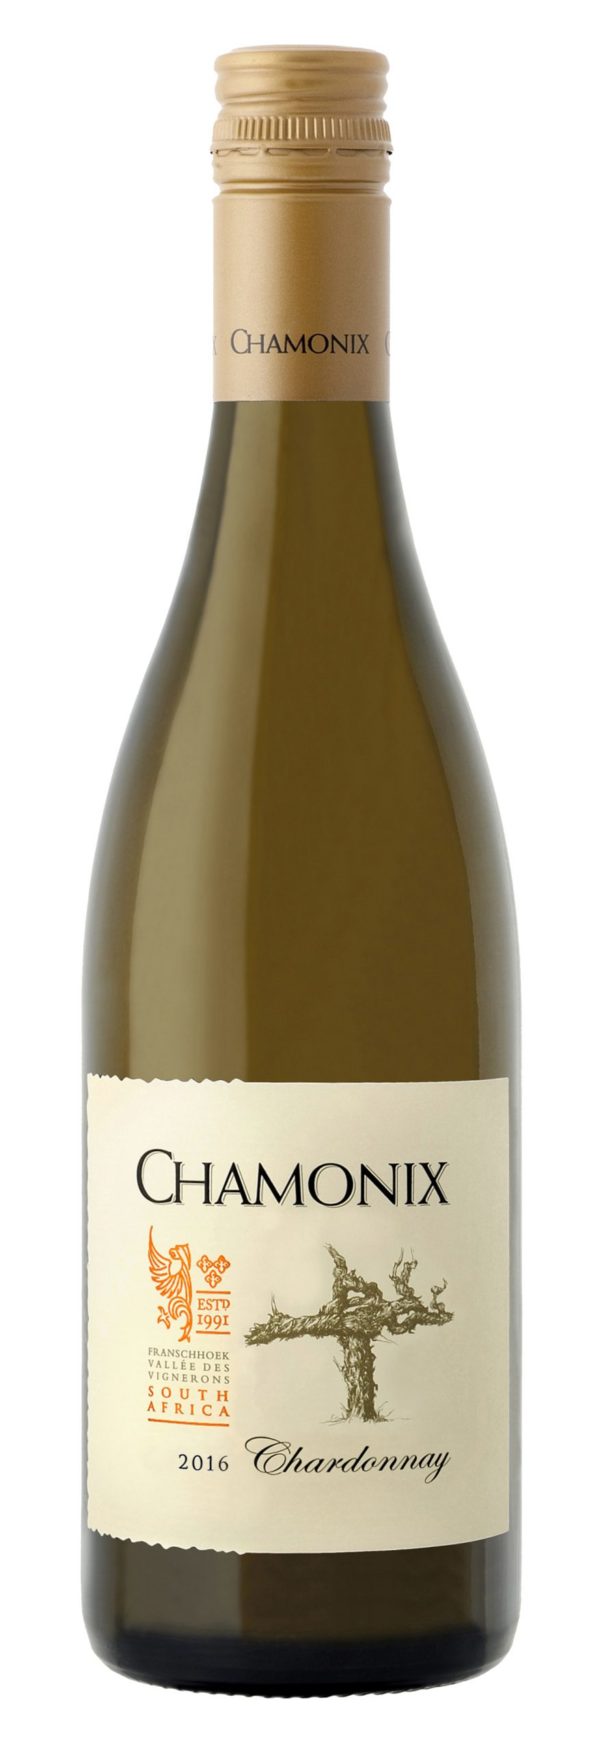 Cape Chamonix Chardonnay